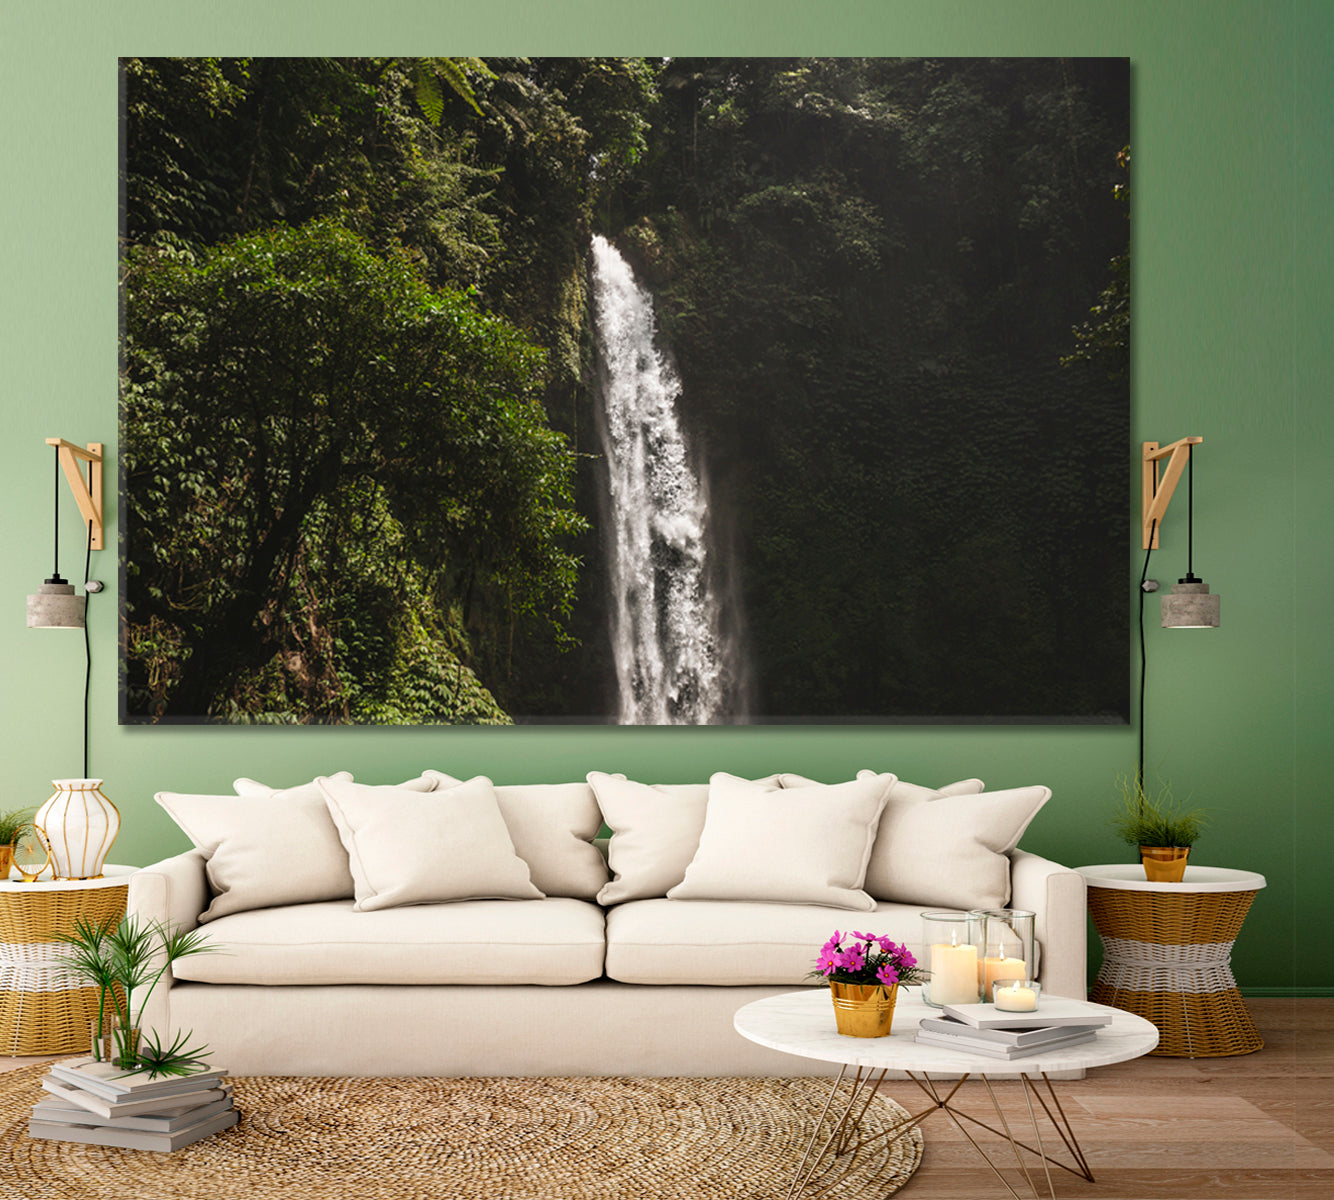 Huge Waterfall Nung Nung Bali Jungle Rainforest Scenic Landscape Nature Wall Canvas Print Artesty 1 panel 24" x 16" 